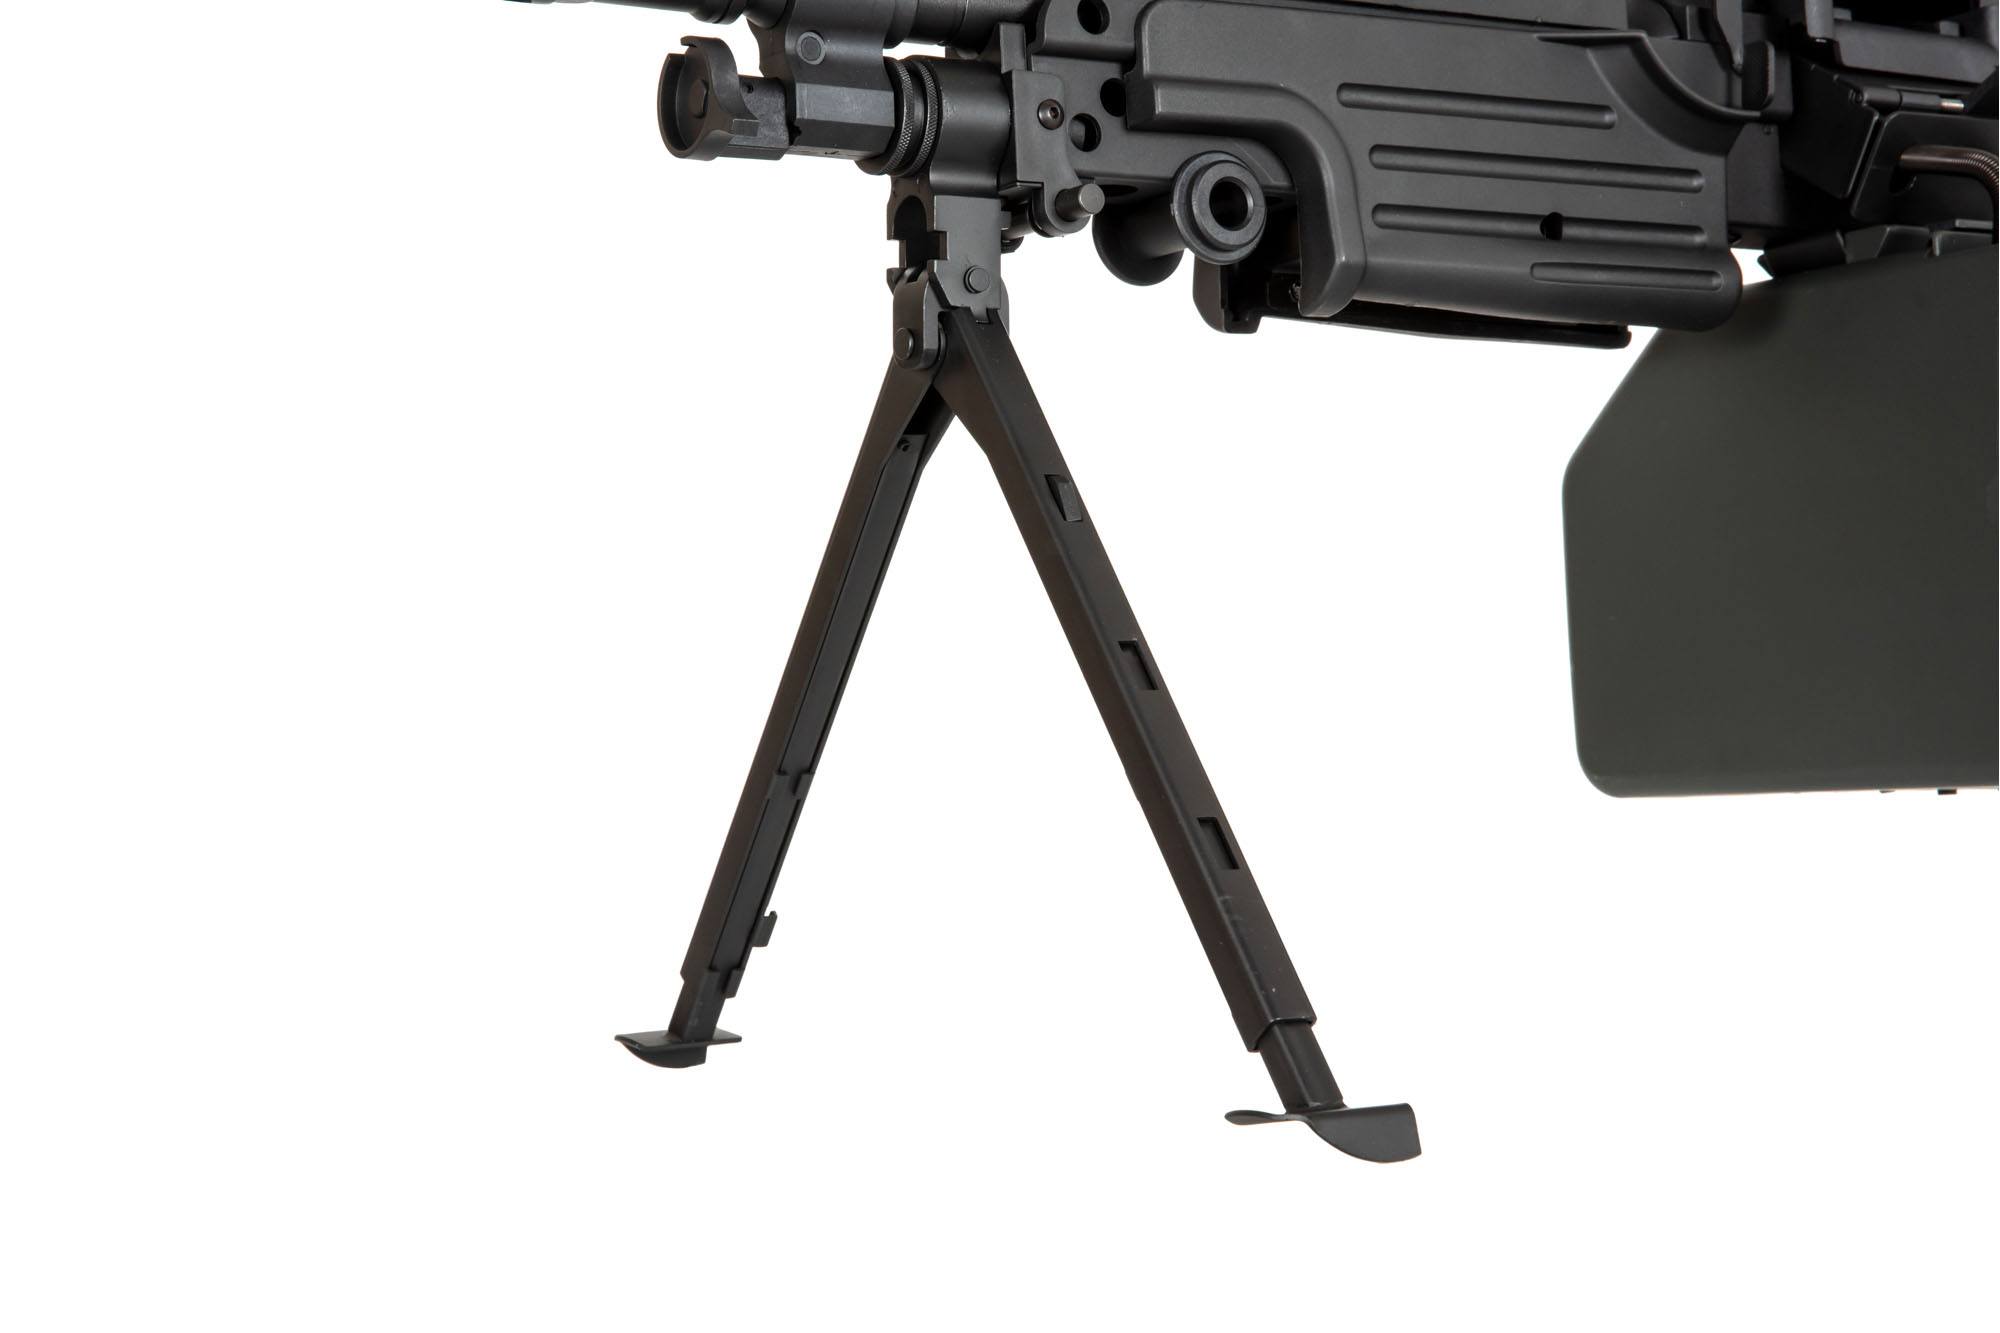 PARA SA-249 CORE ™ Machine Gun Replica - Black by Specna Arms on Airsoft Mania Europe